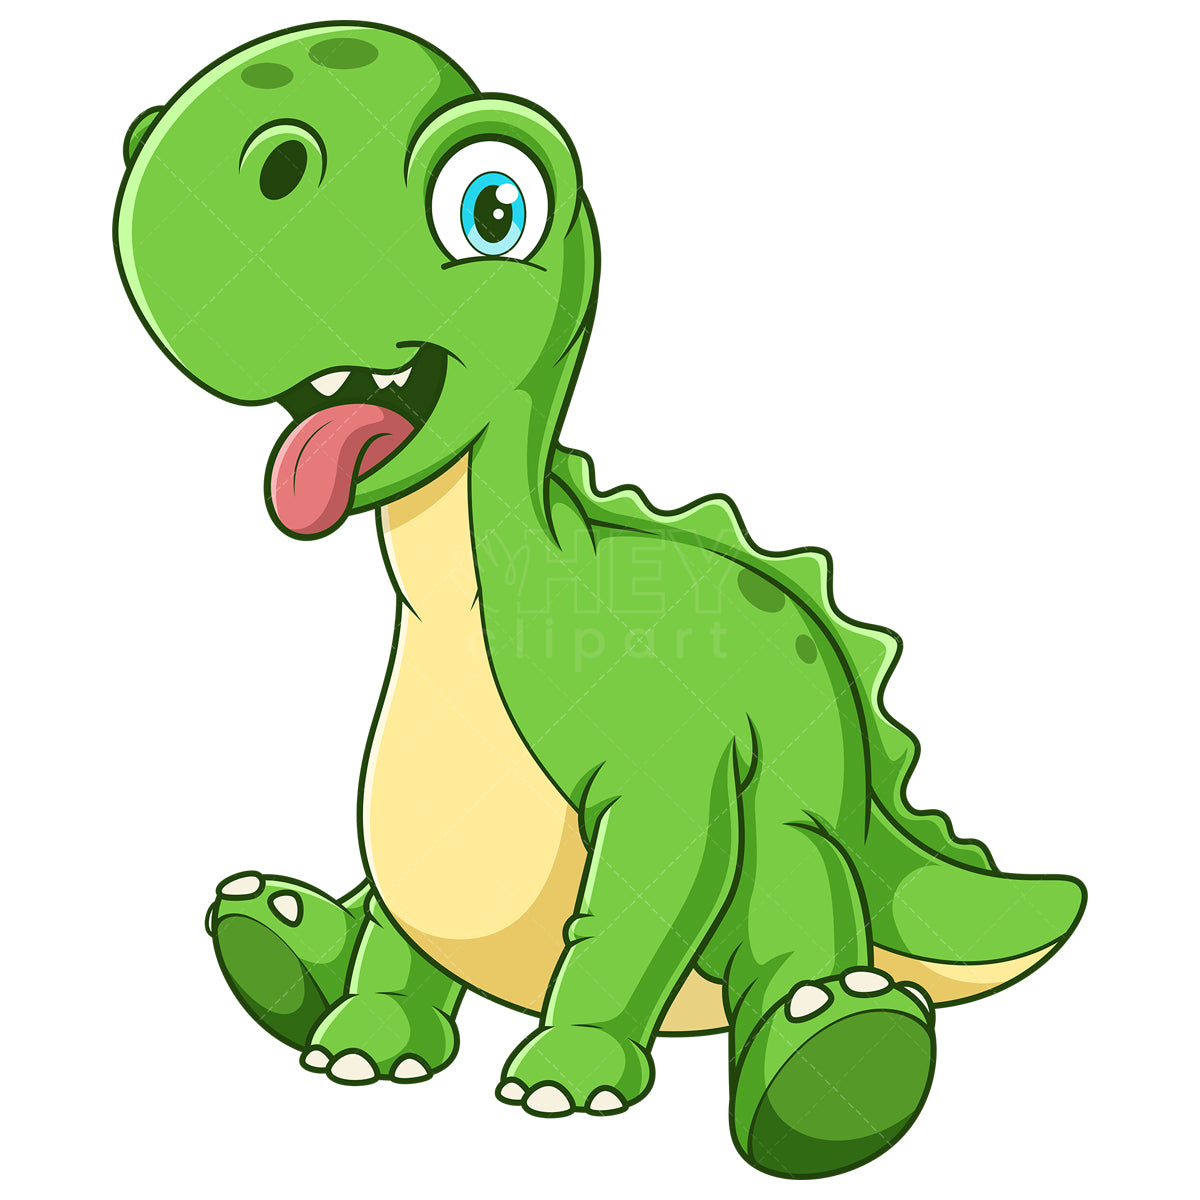 Royalty-free stock vector illustration of a happy dinosaur dog.